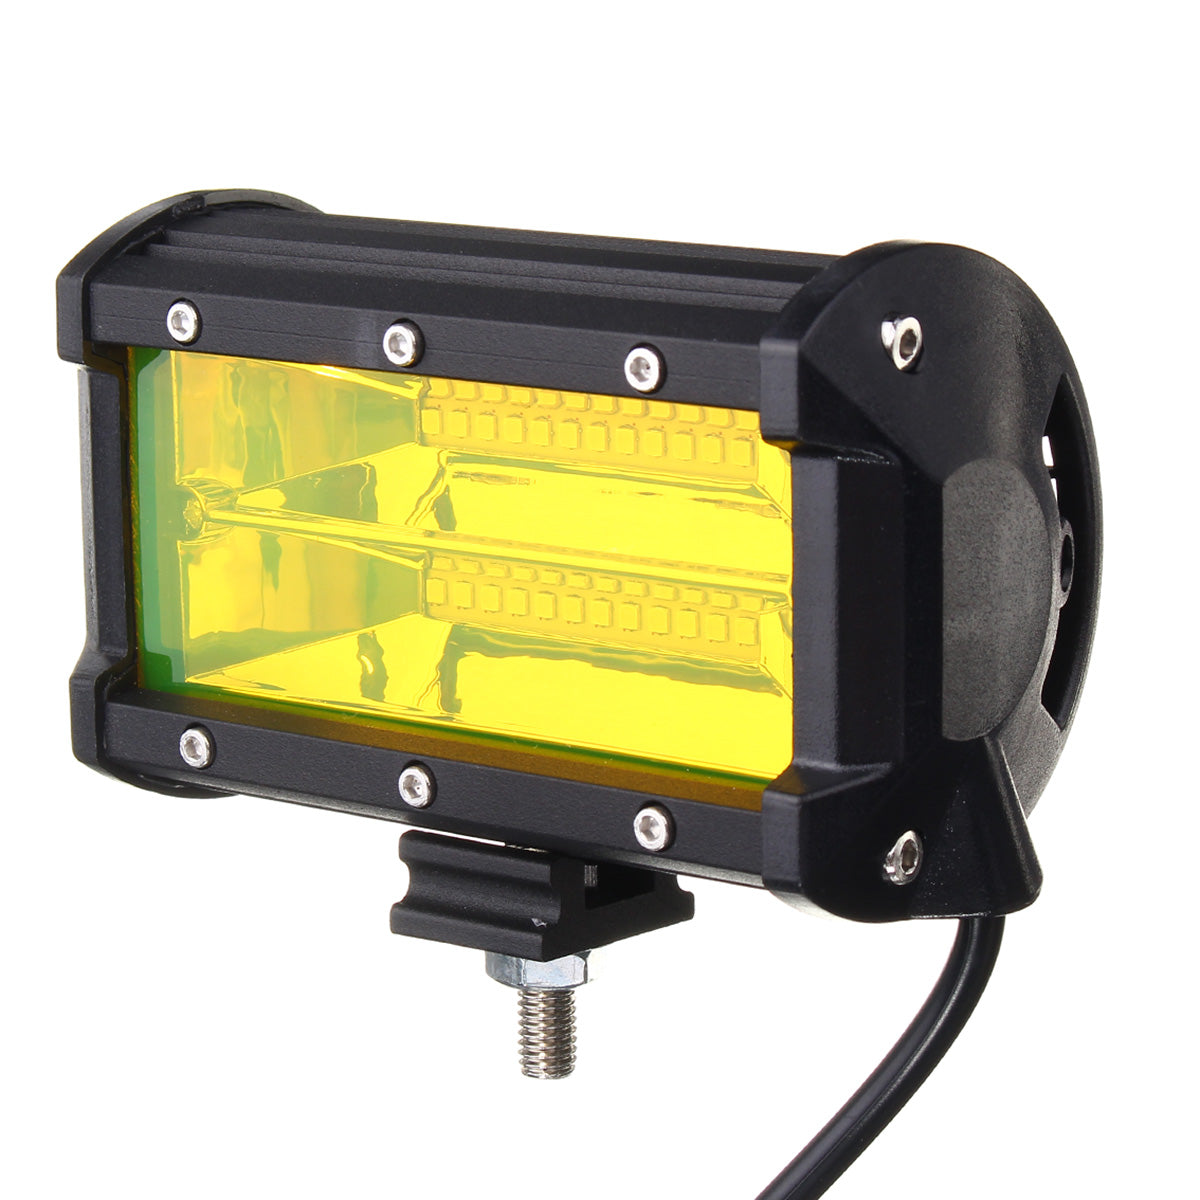 Light Goldenrod 5Inch 48W 24 LED Work Light Bar Flood Beam Lamp for Car SUV Boat Driving Offroad ATV